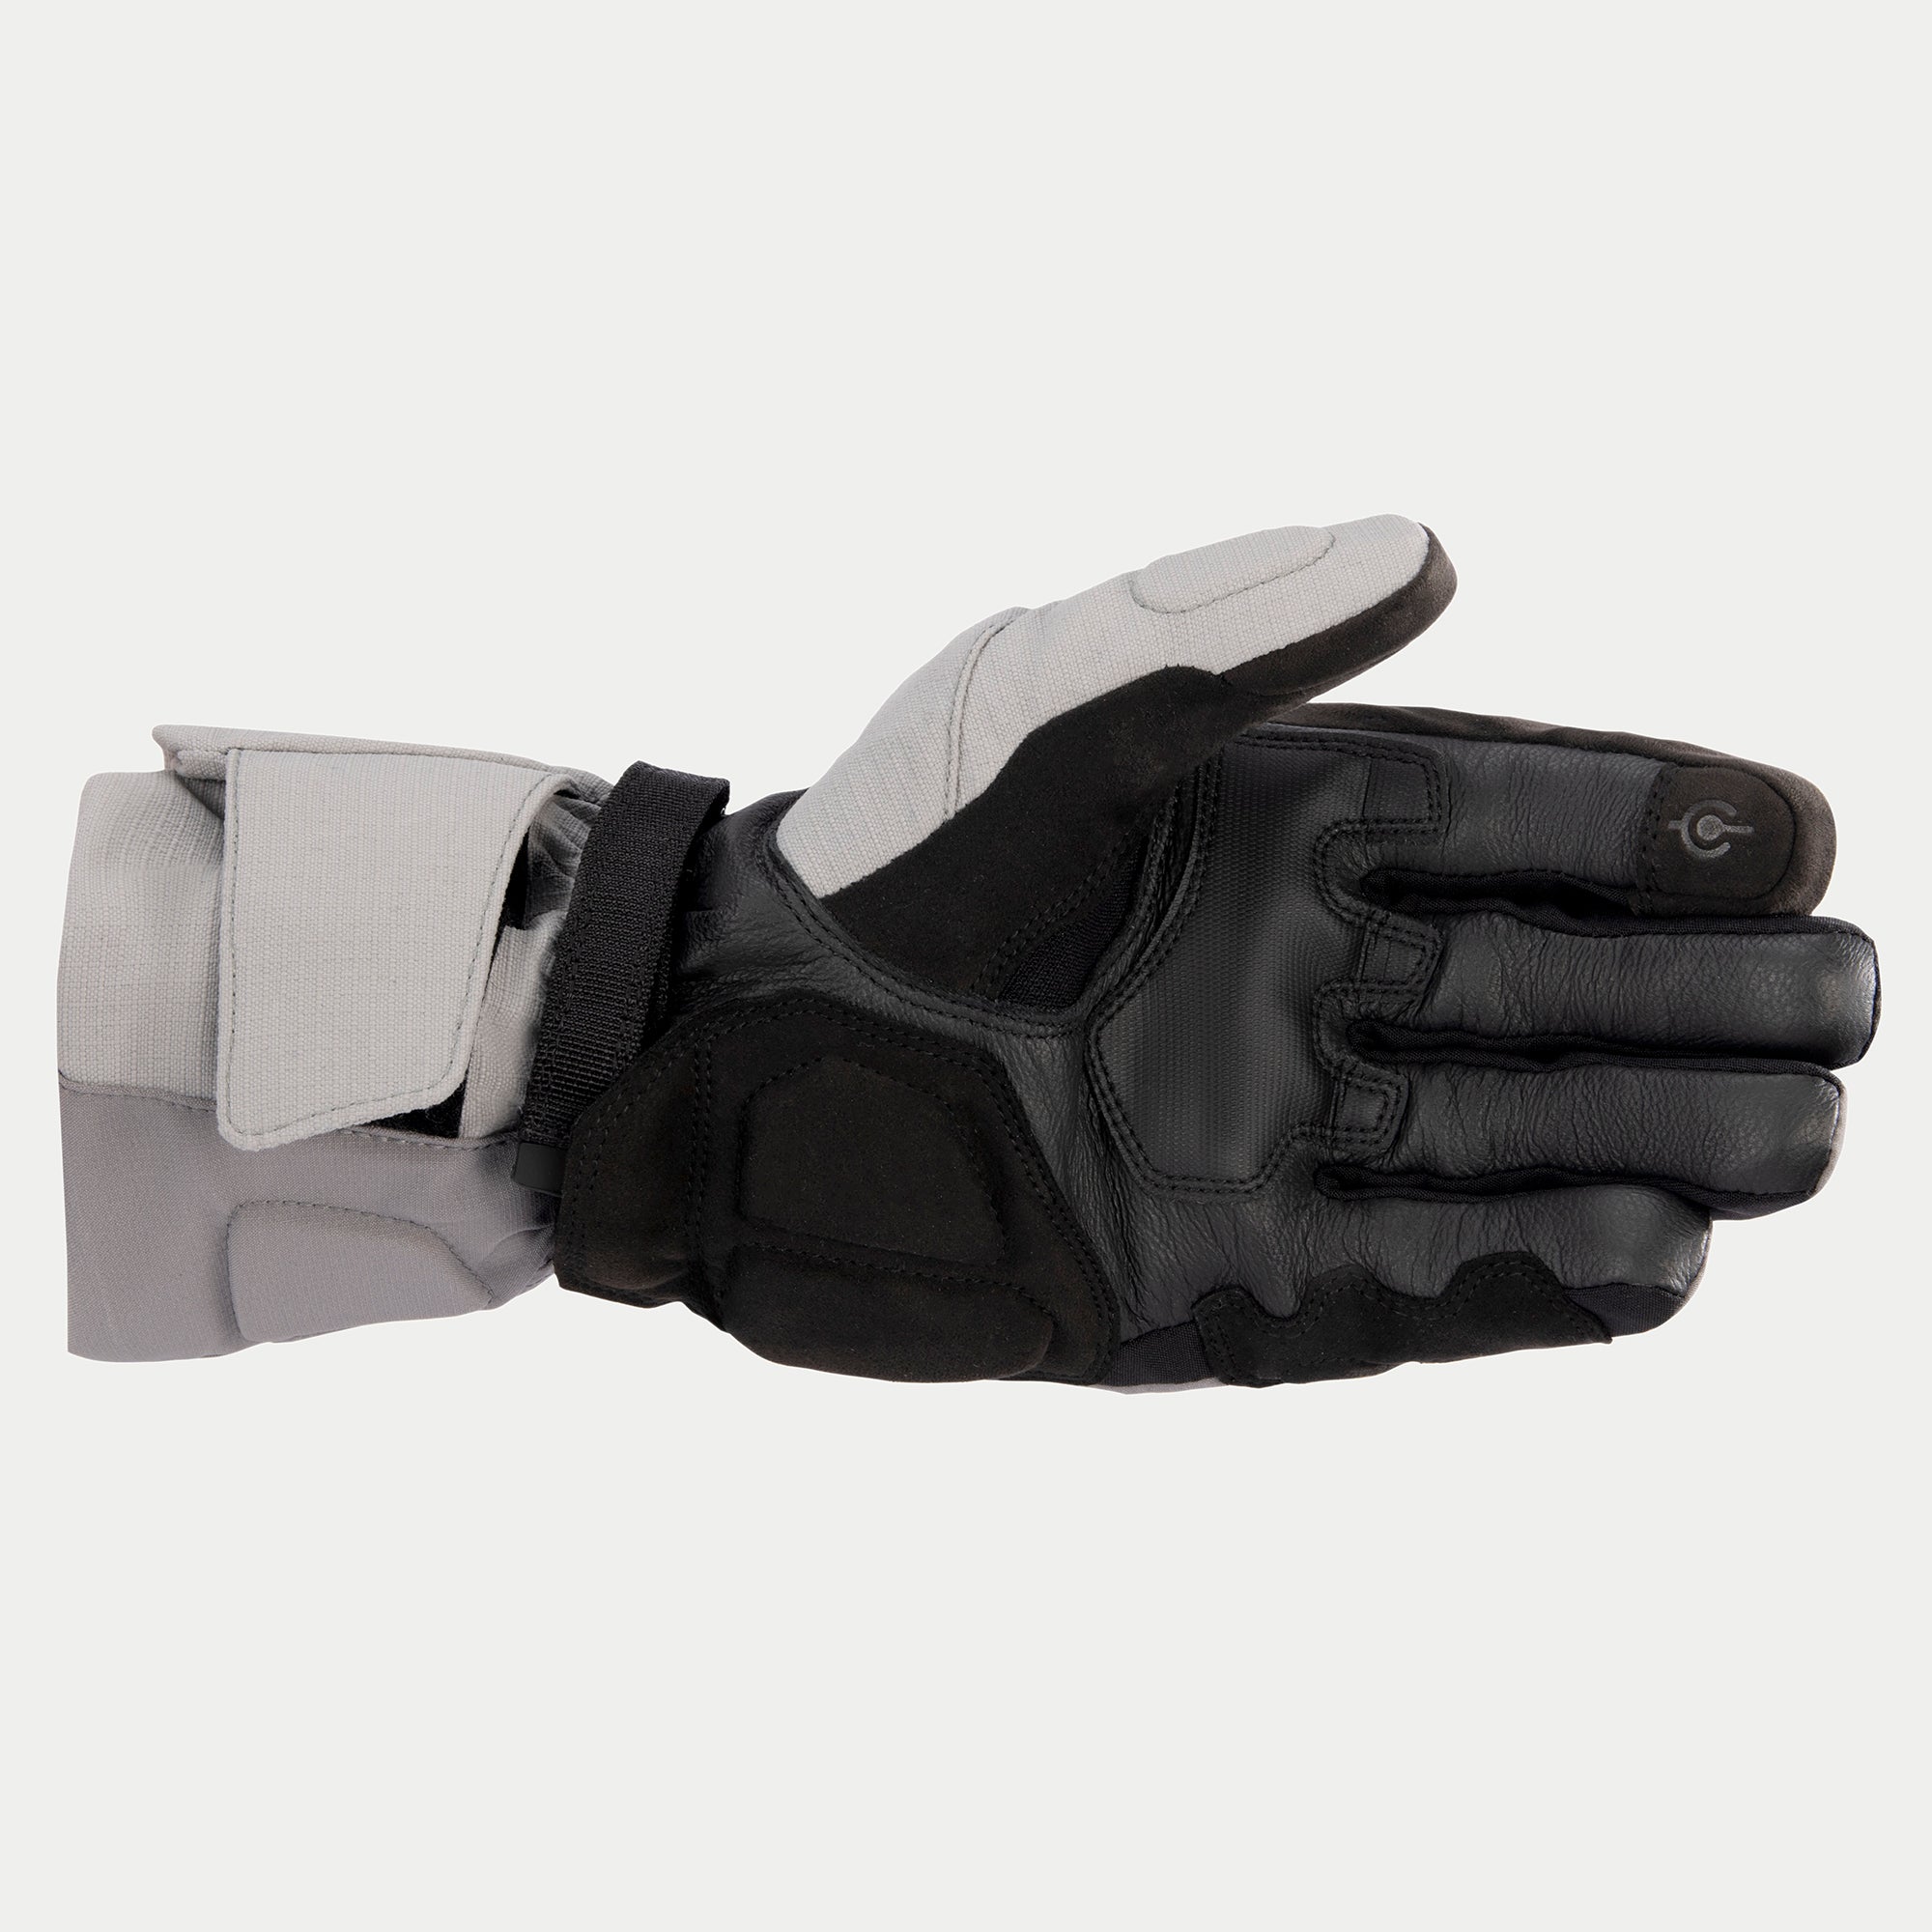 WR-X Gore-Tex Gloves